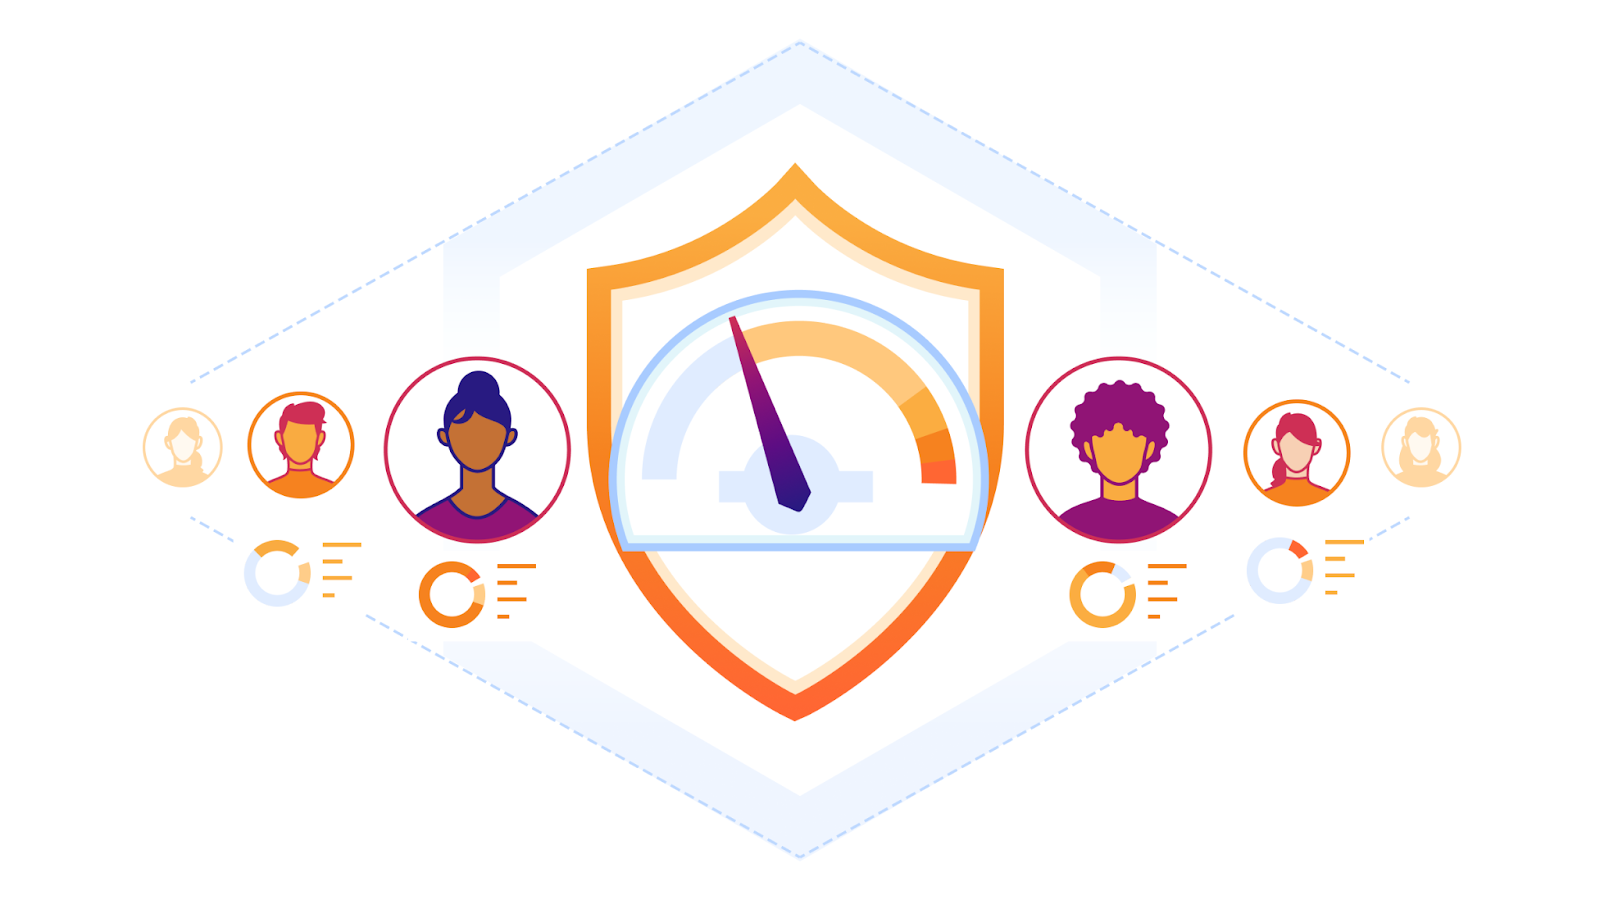 Introducing behavior-based user risk scoring in Cloudflare One